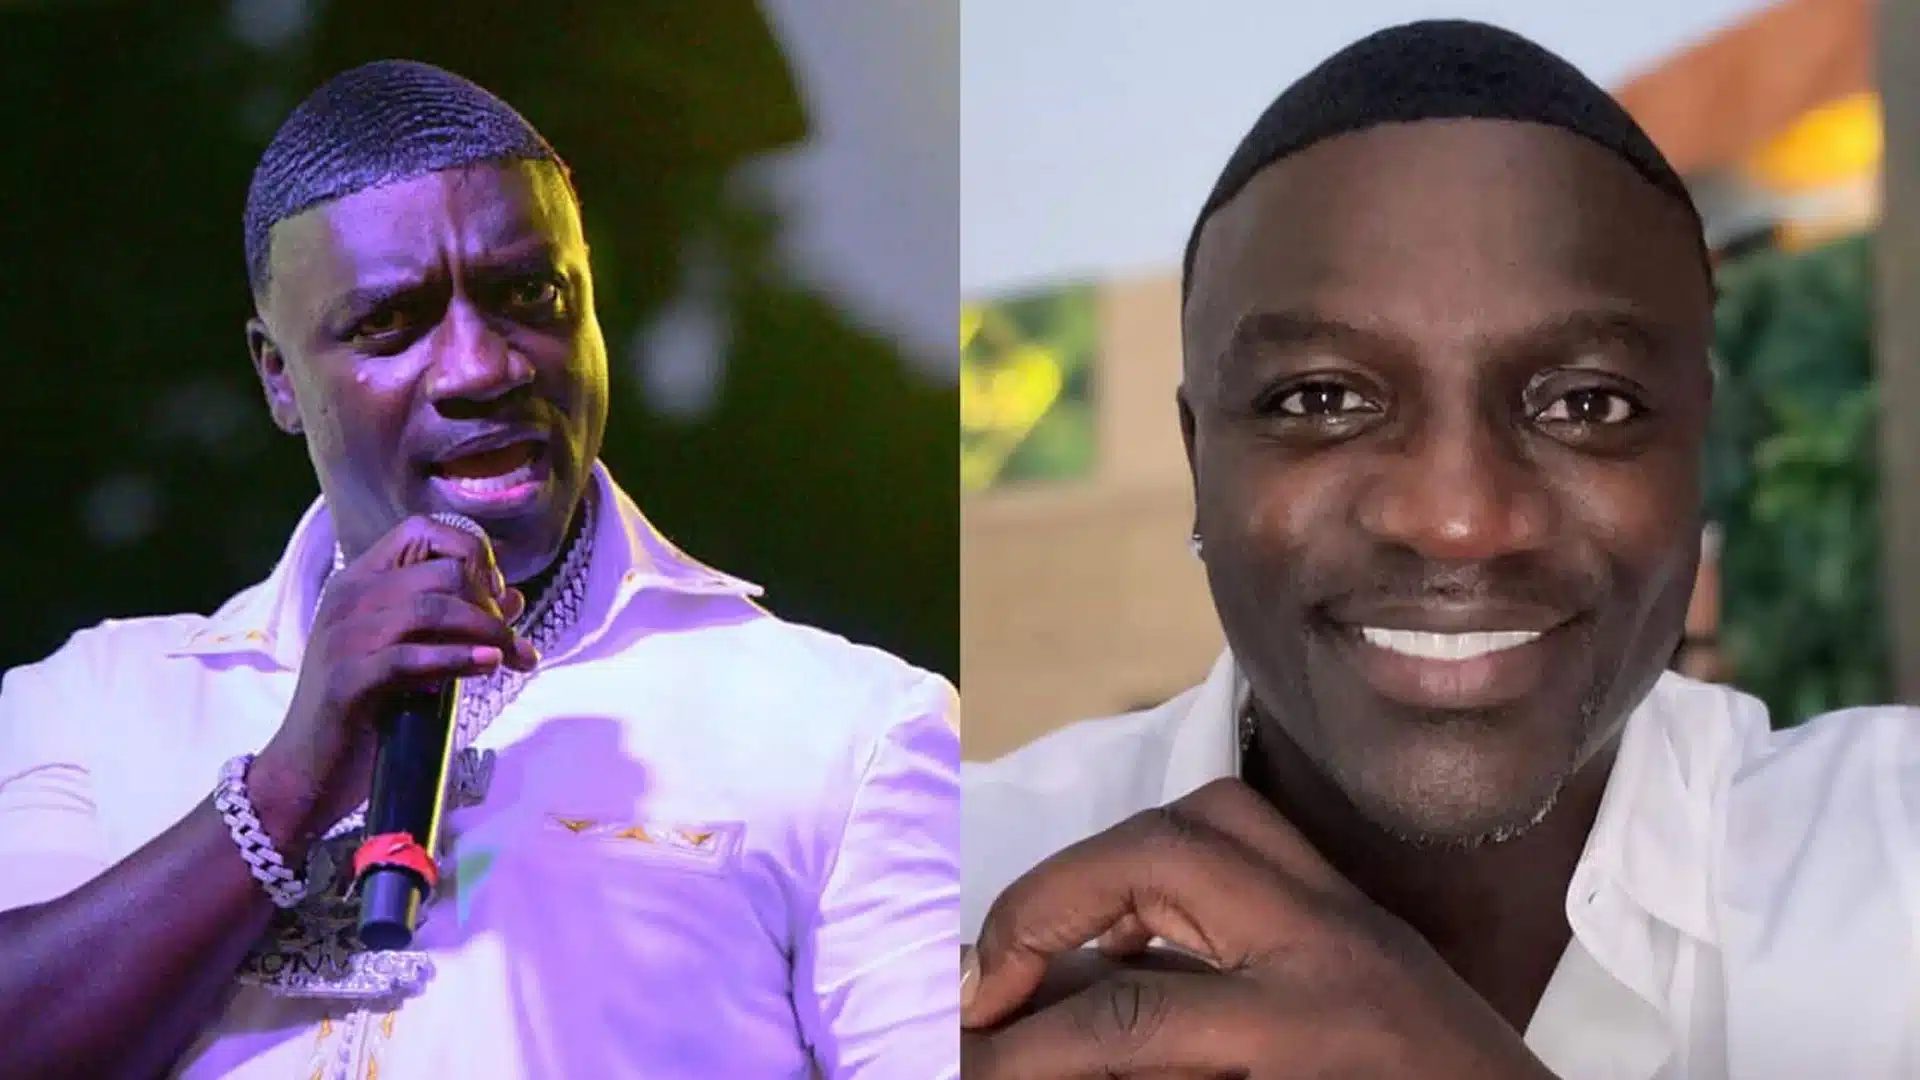 Famous Singer Akon Has Undergone Hair Transplant in Turkey